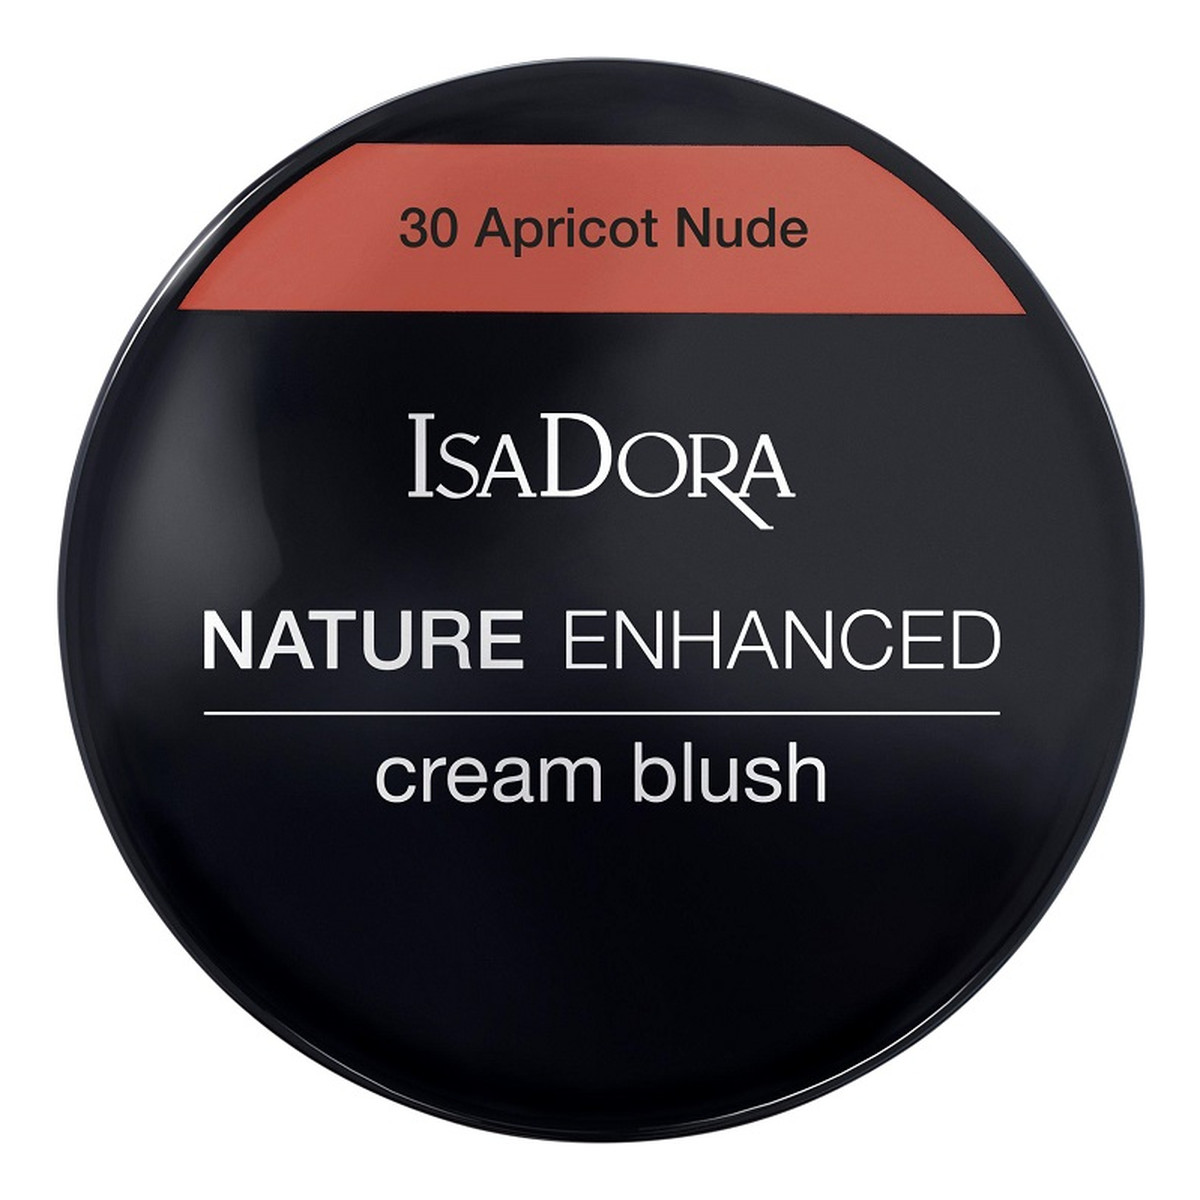 Isadora Nature enhanced cream blush róż do policzków 30 apricot nude 3g